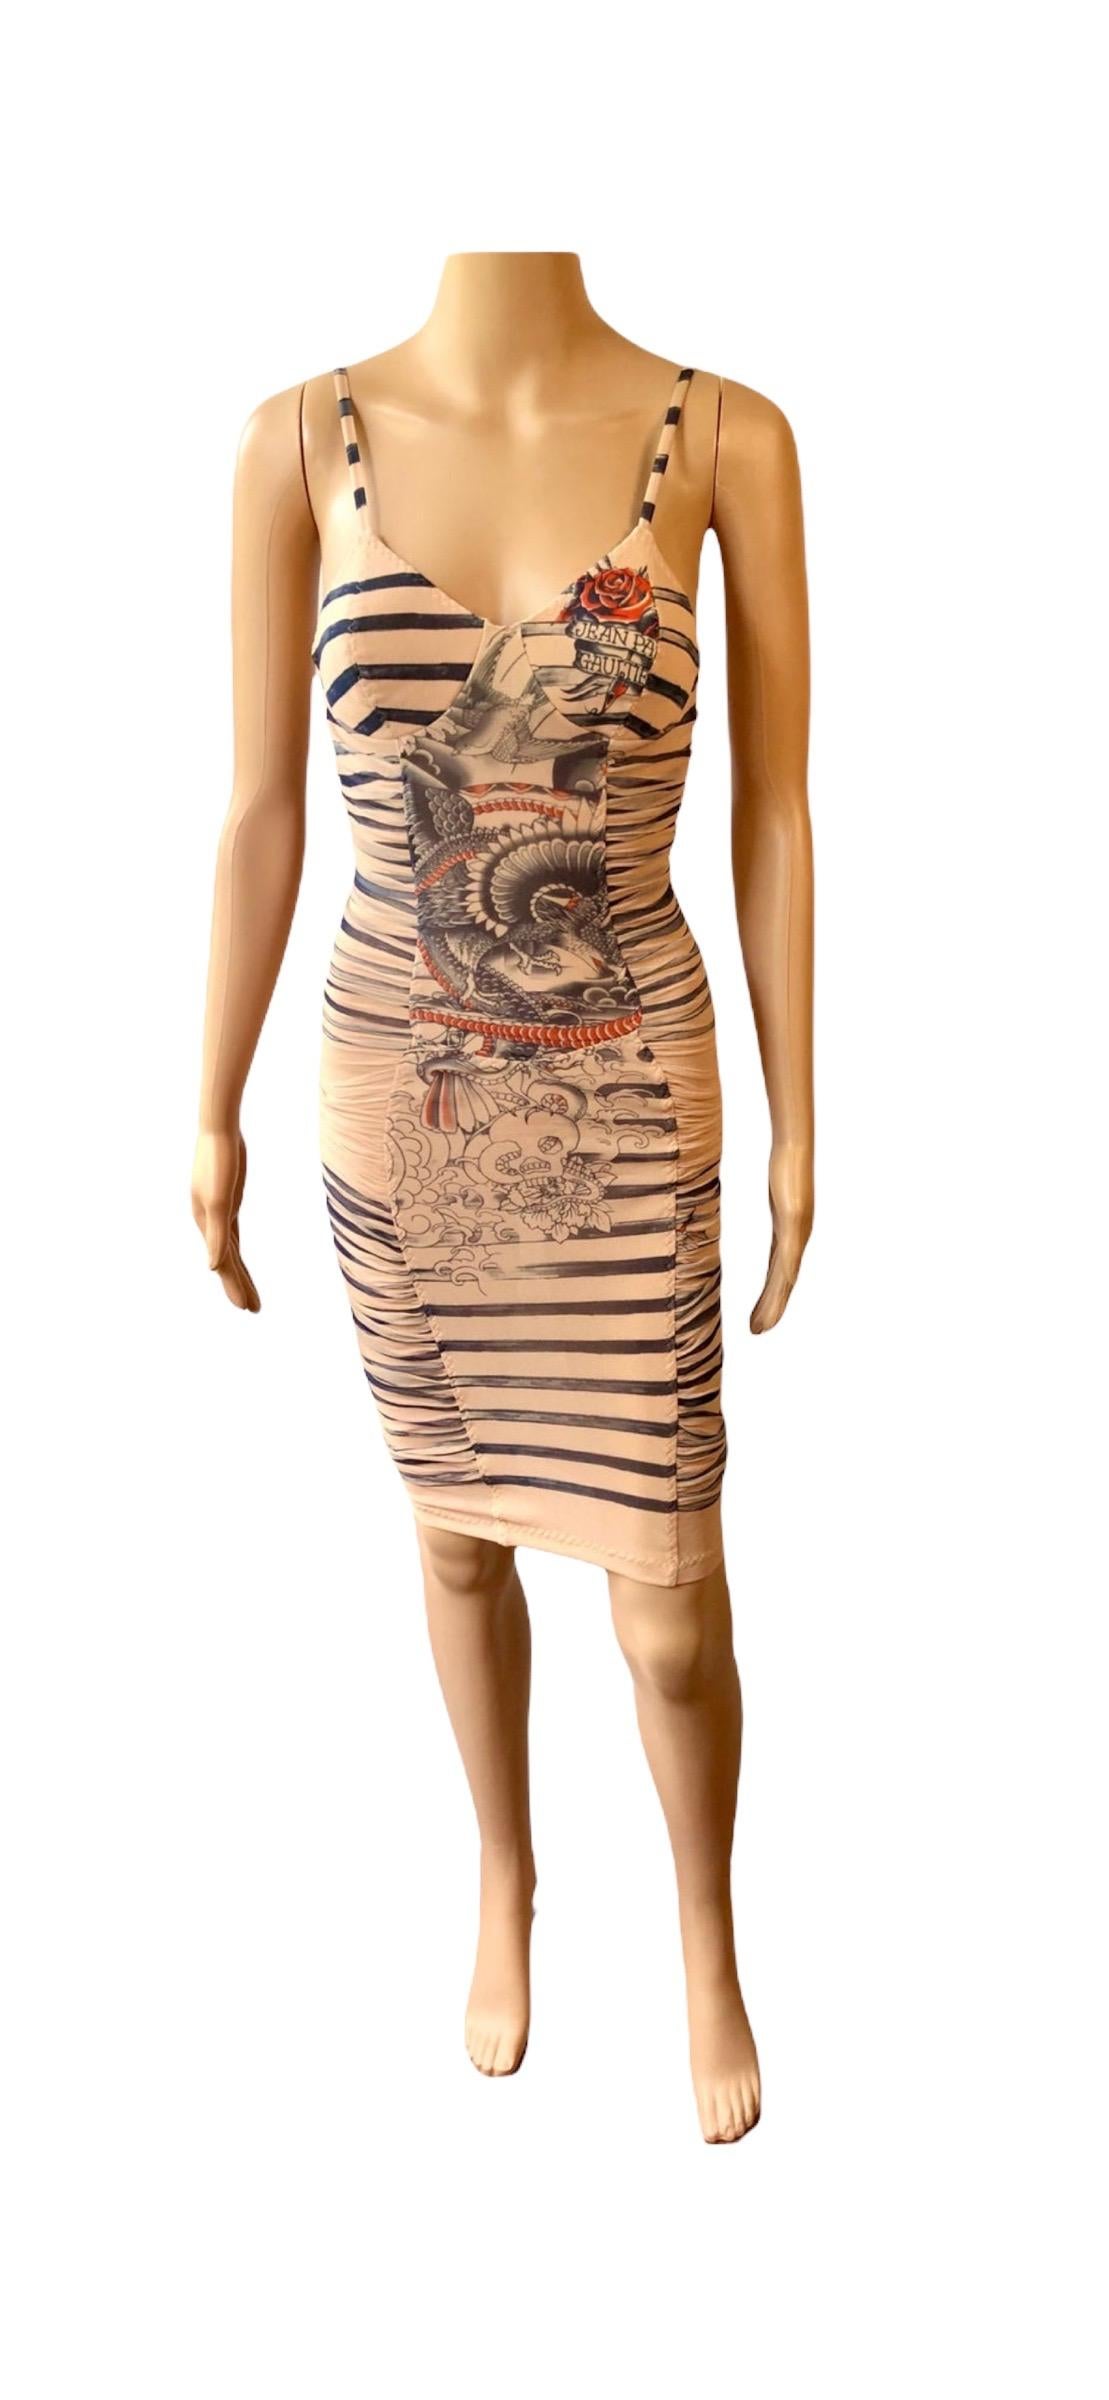 Jean Paul Gaultier Soleil S/S 2012 Tattoo Print Semi-Sheer Mesh Bodycon Dress 2